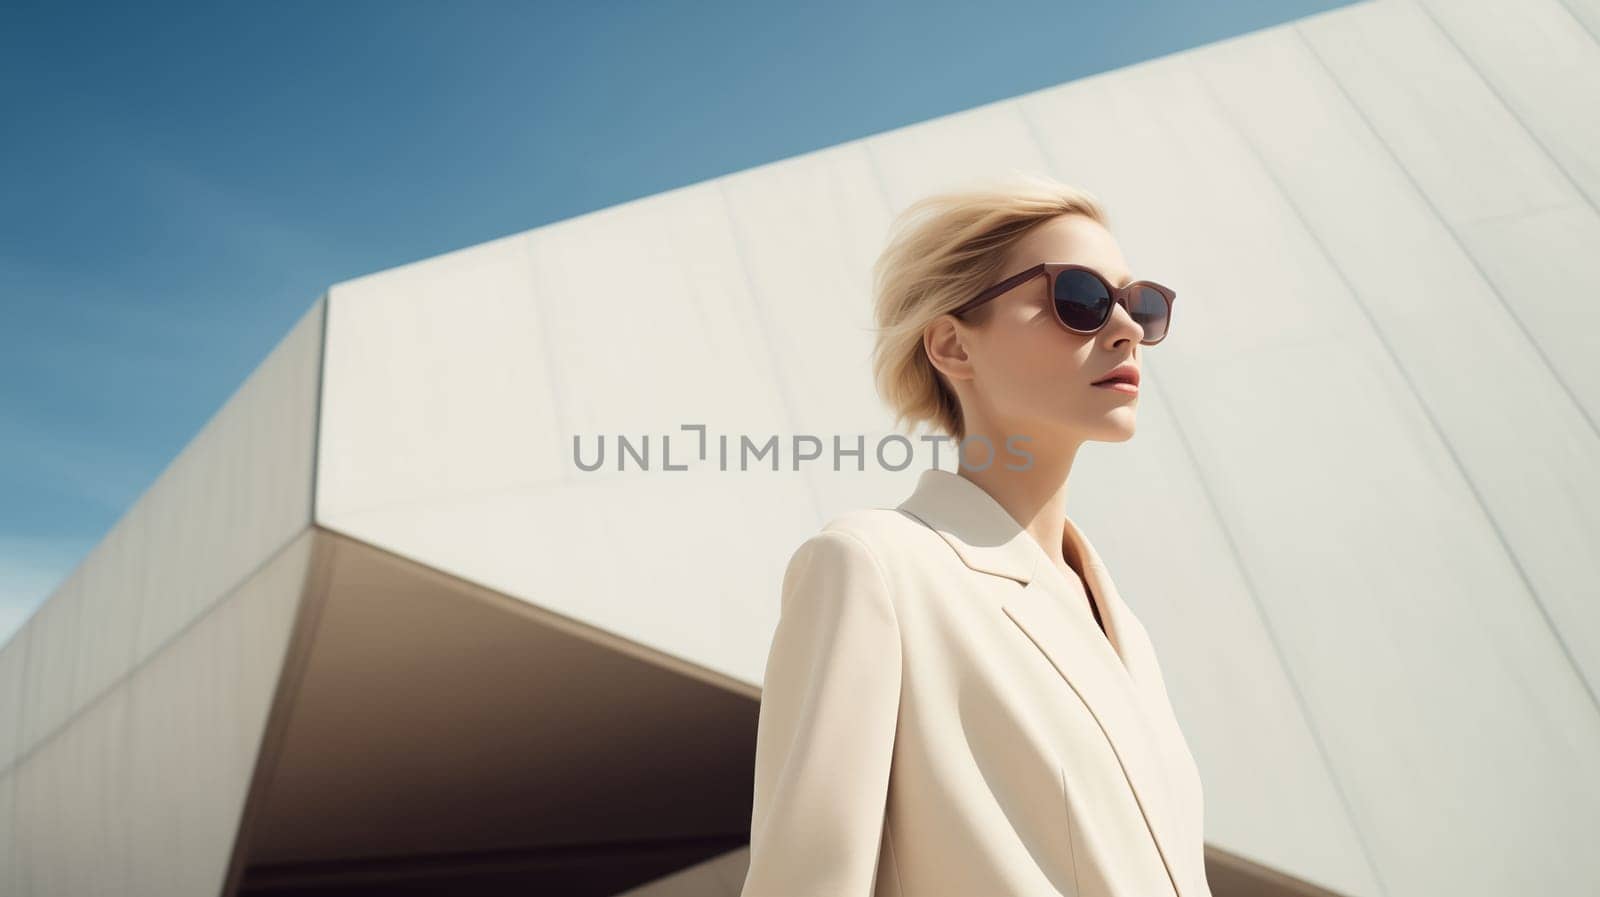 Fashionable portrait of stylish elegant woman against the minimalism design architecture of a modern art museum building